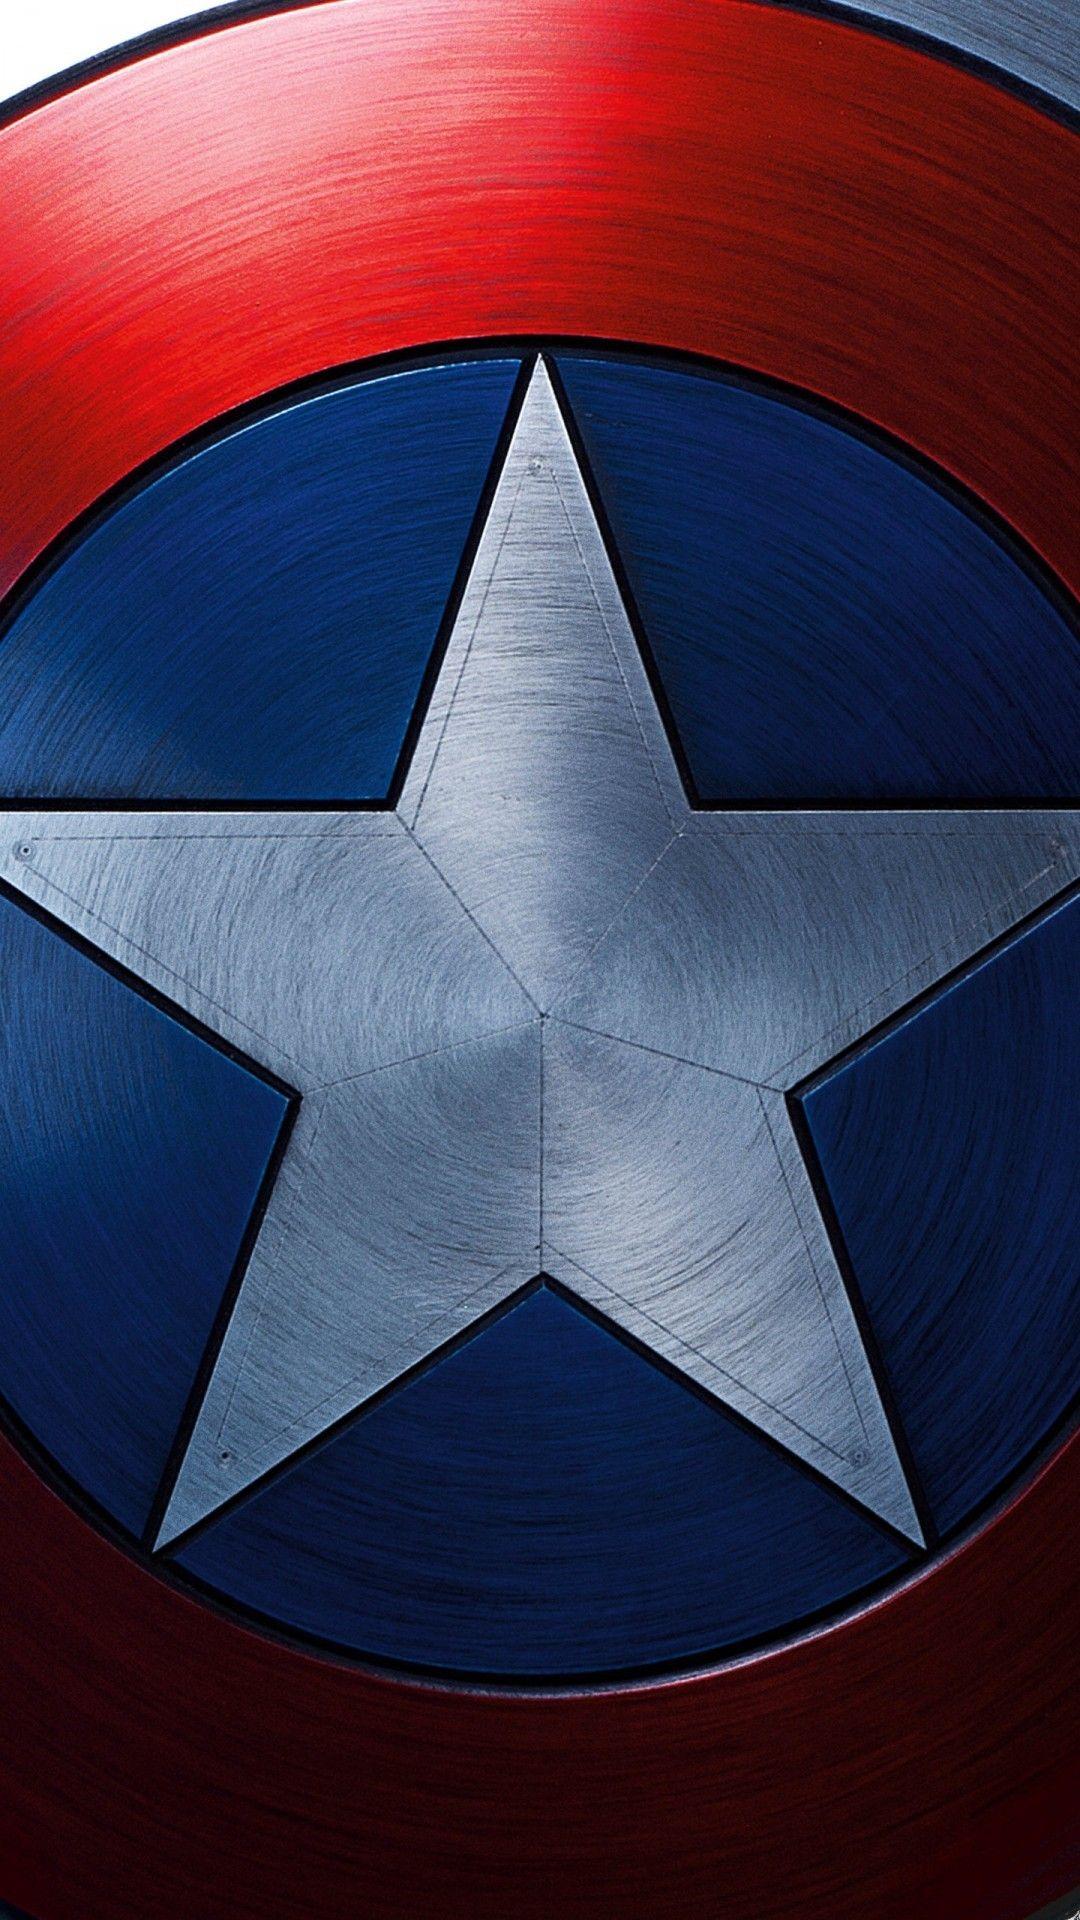 Hình nền HD 1080x1920 Captain America: Civil War cho iPhone 6s Plus